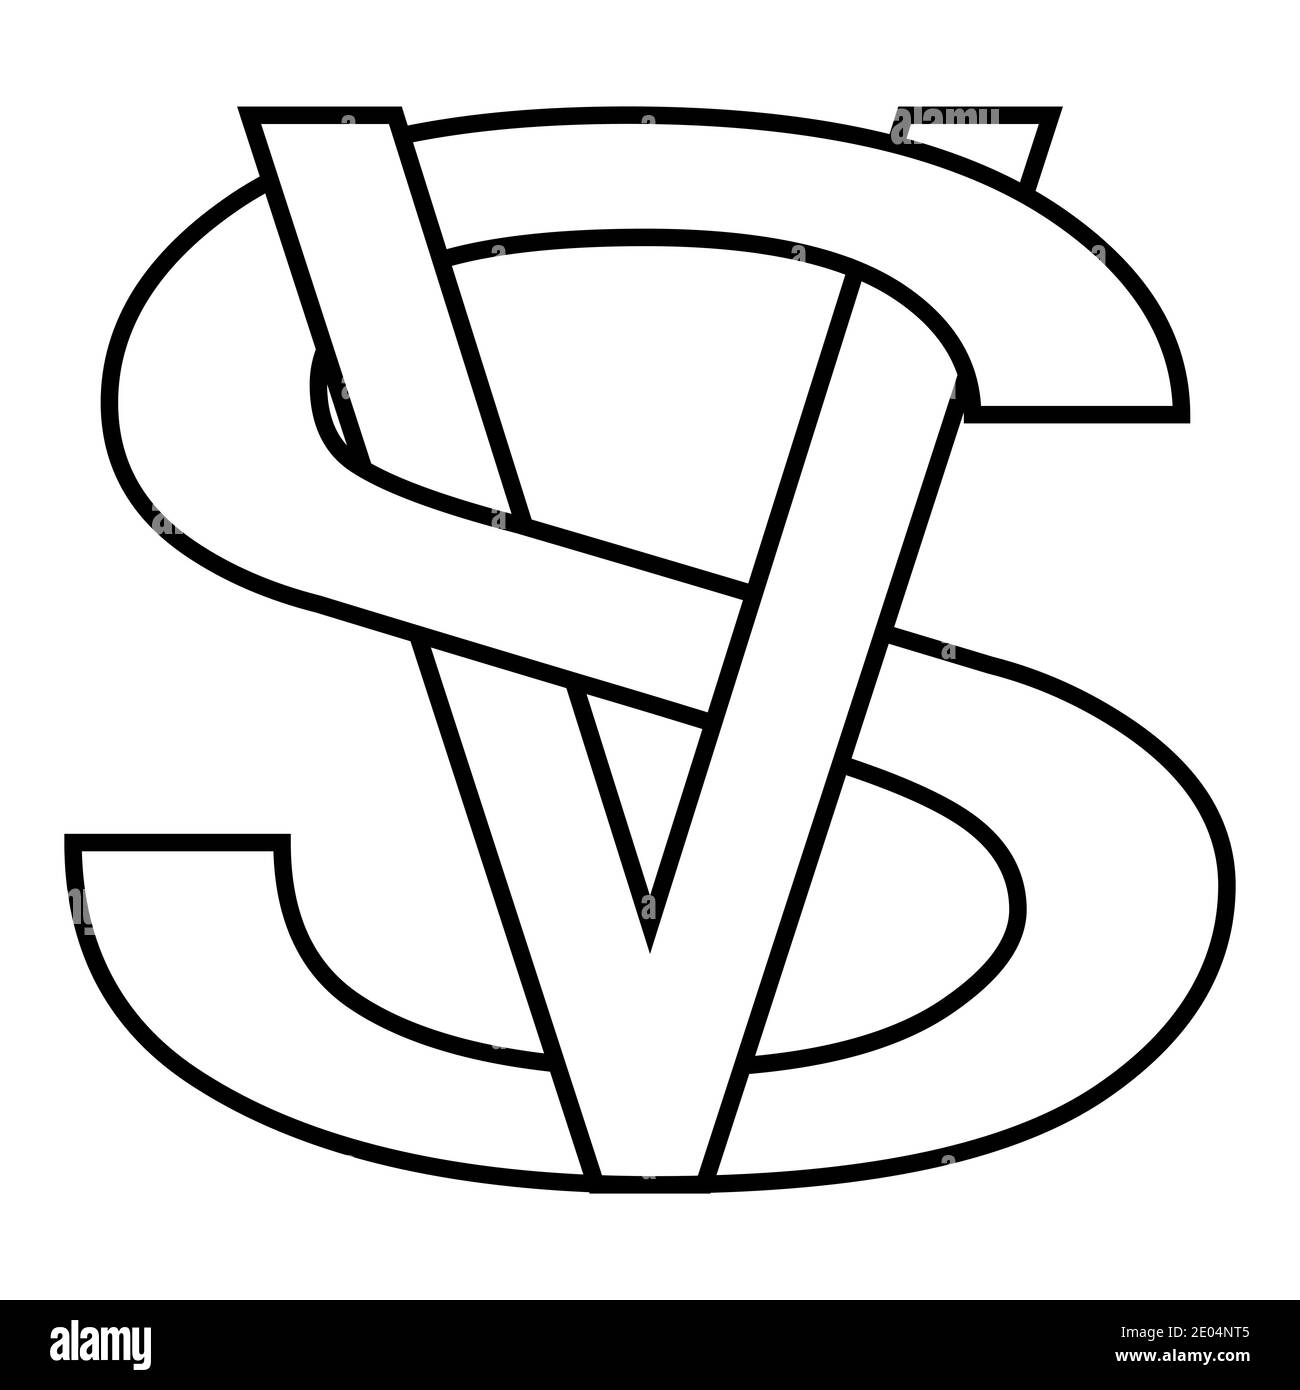 Buchstaben verflochten V und S vs gegen Logo, Vektor-Logo VS Buchstaben für Sport, Kampf, Wettbewerb, gegen Kampf, Spiel, v und s Buchstaben Spiel Stock Vektor